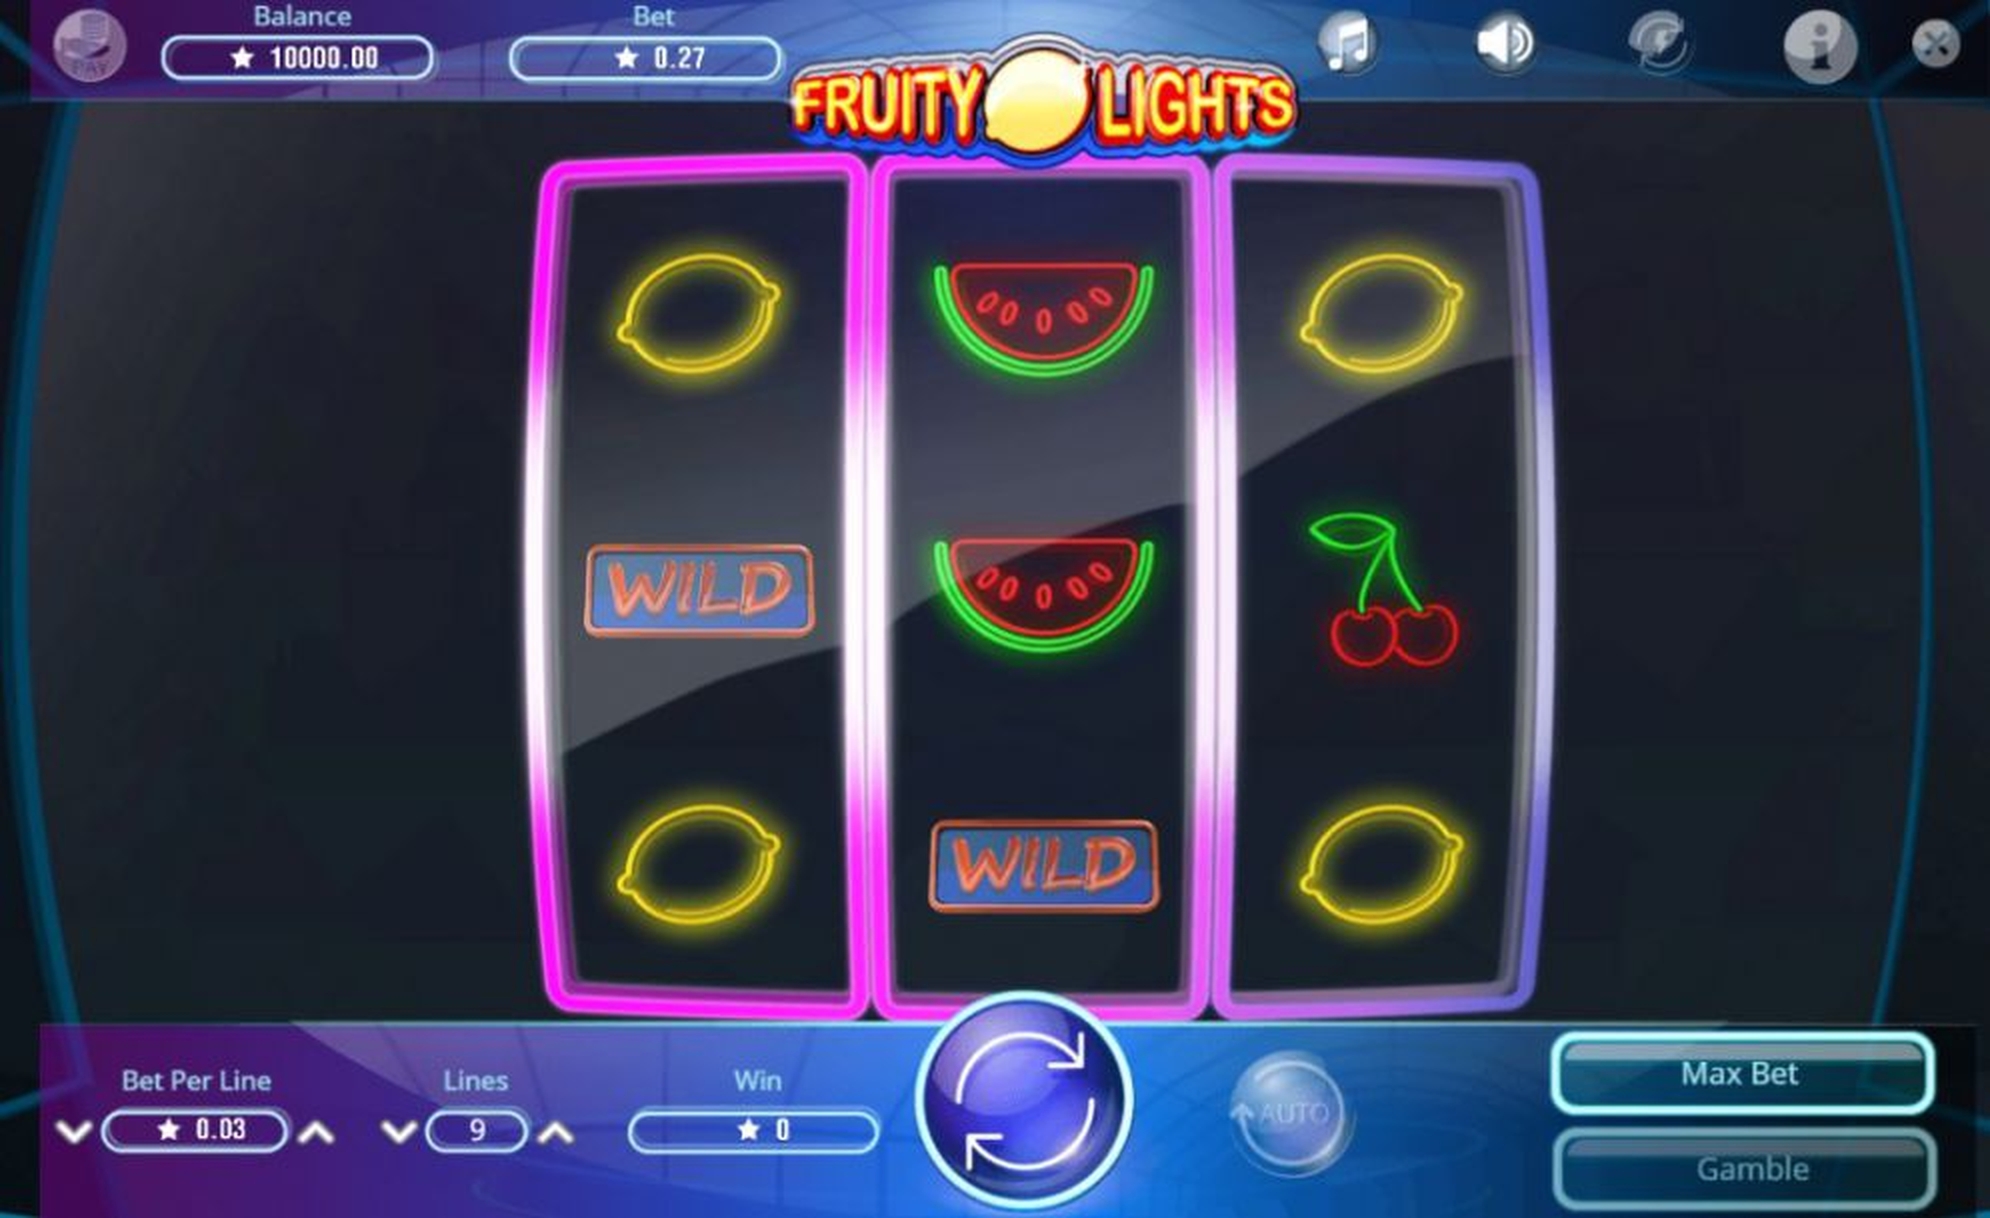 Fruity Lights demo